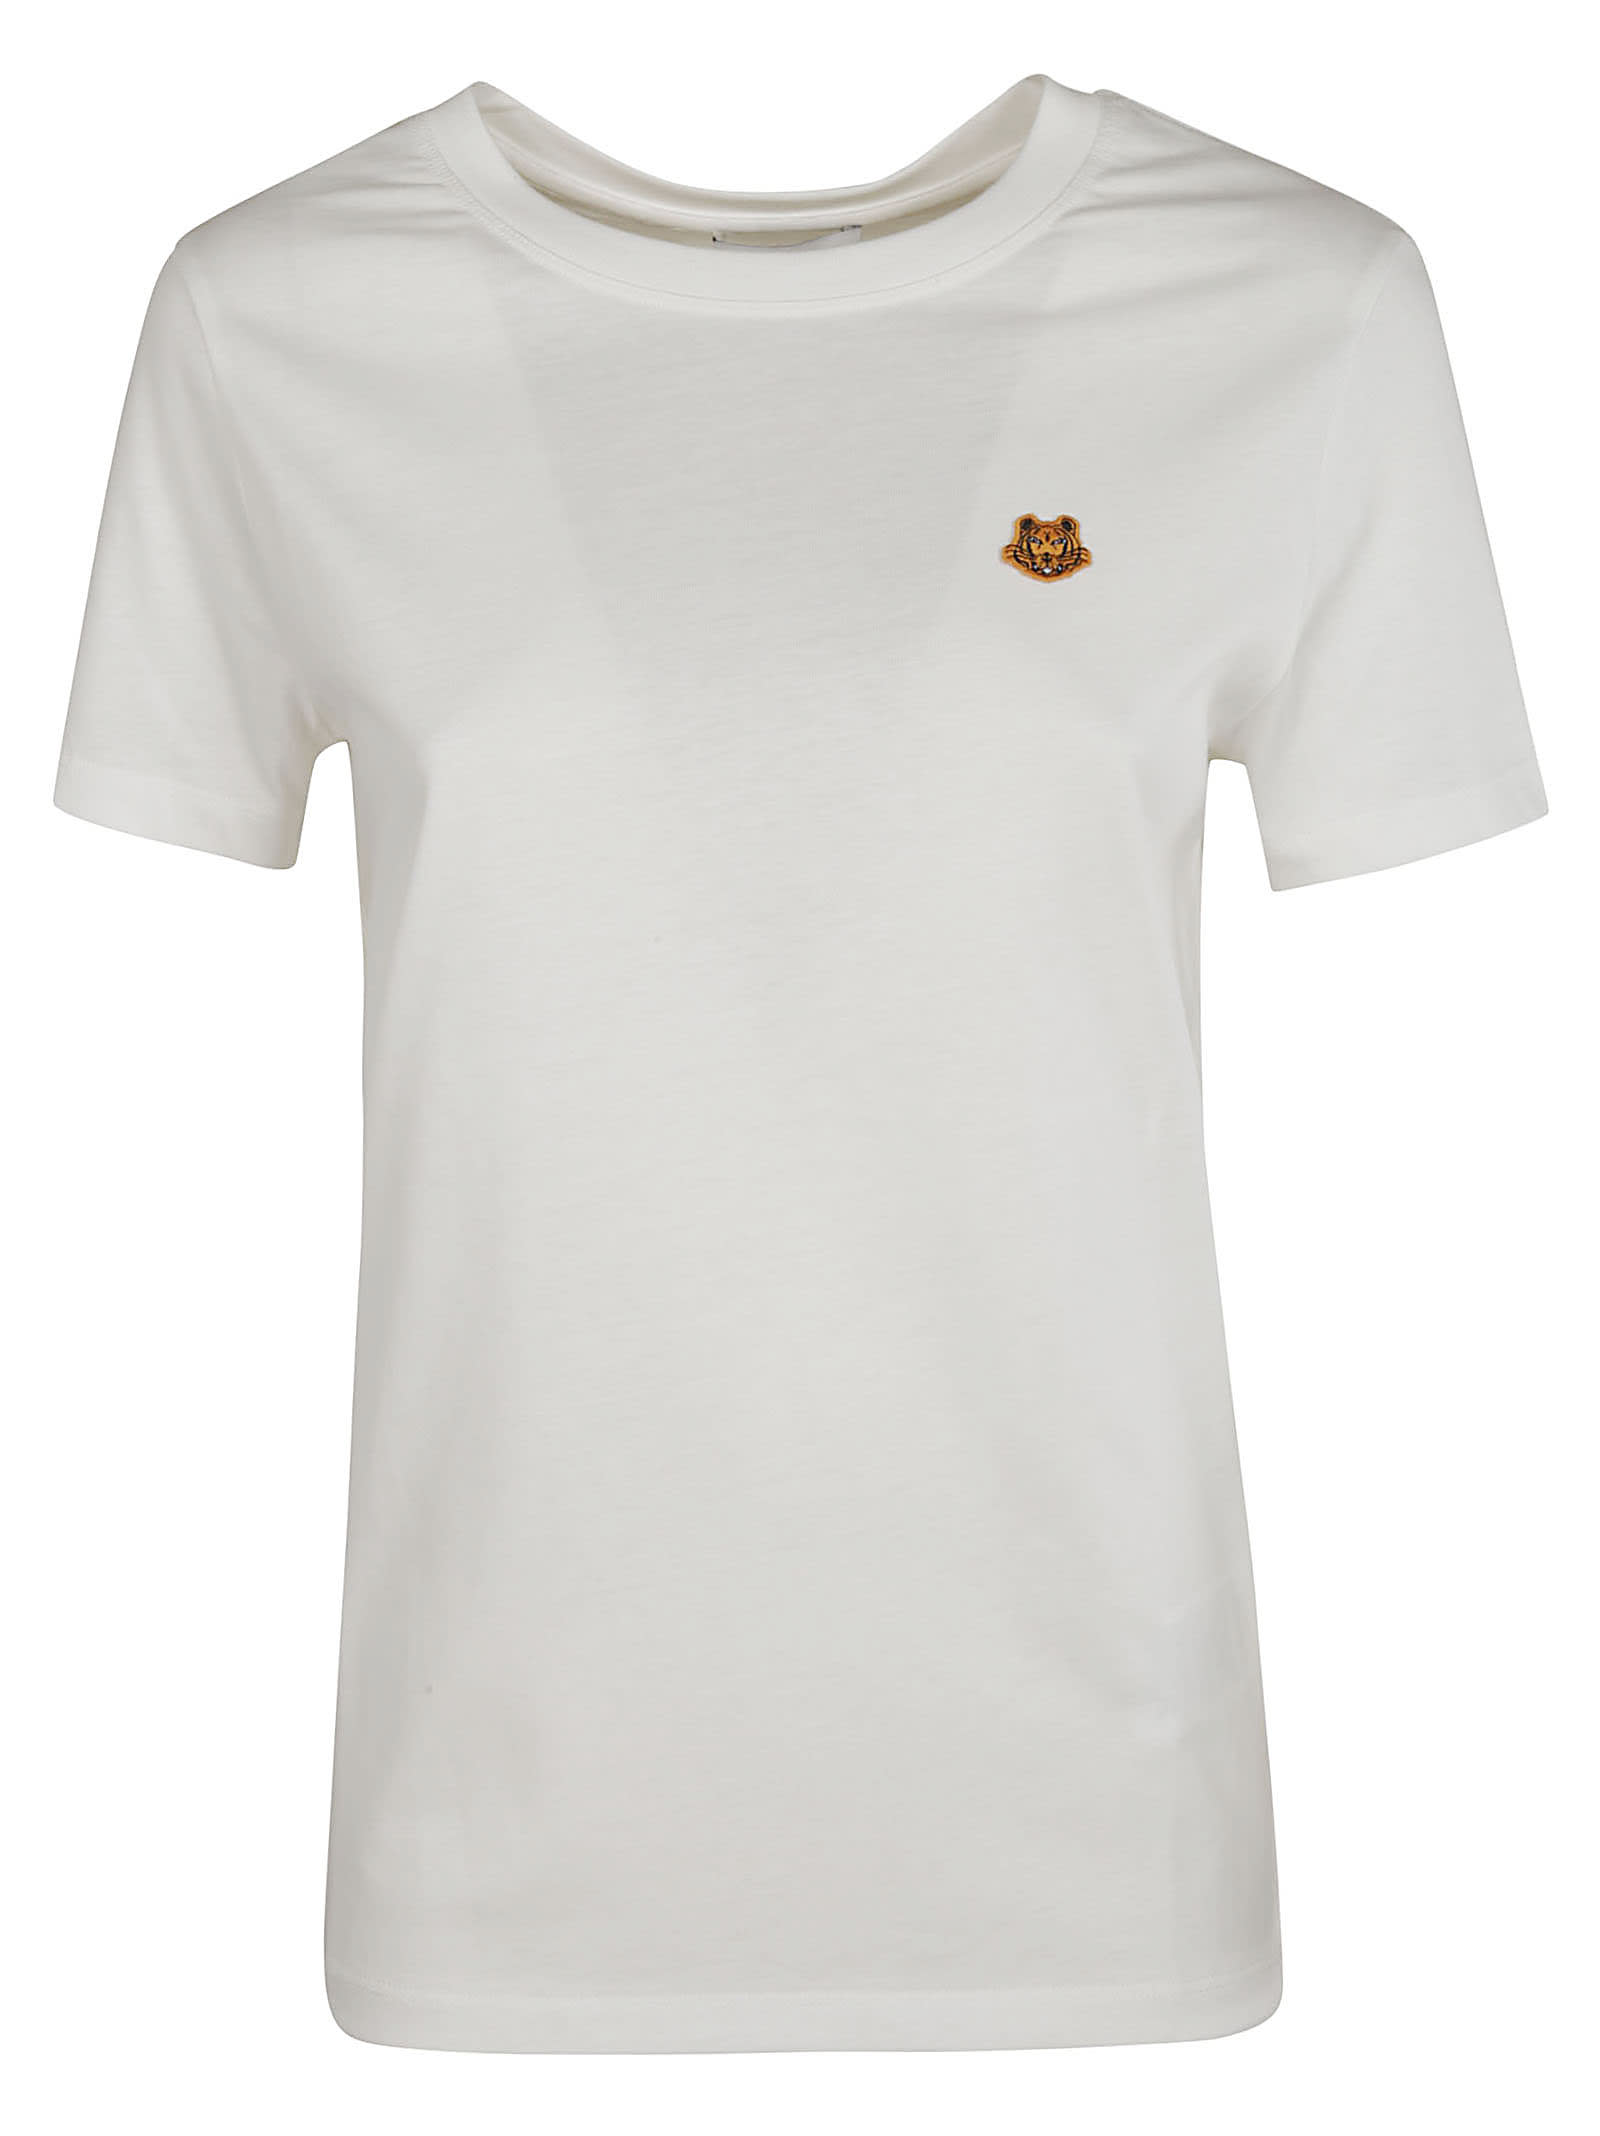 Kenzo Classic Tiger Crest T-shirt